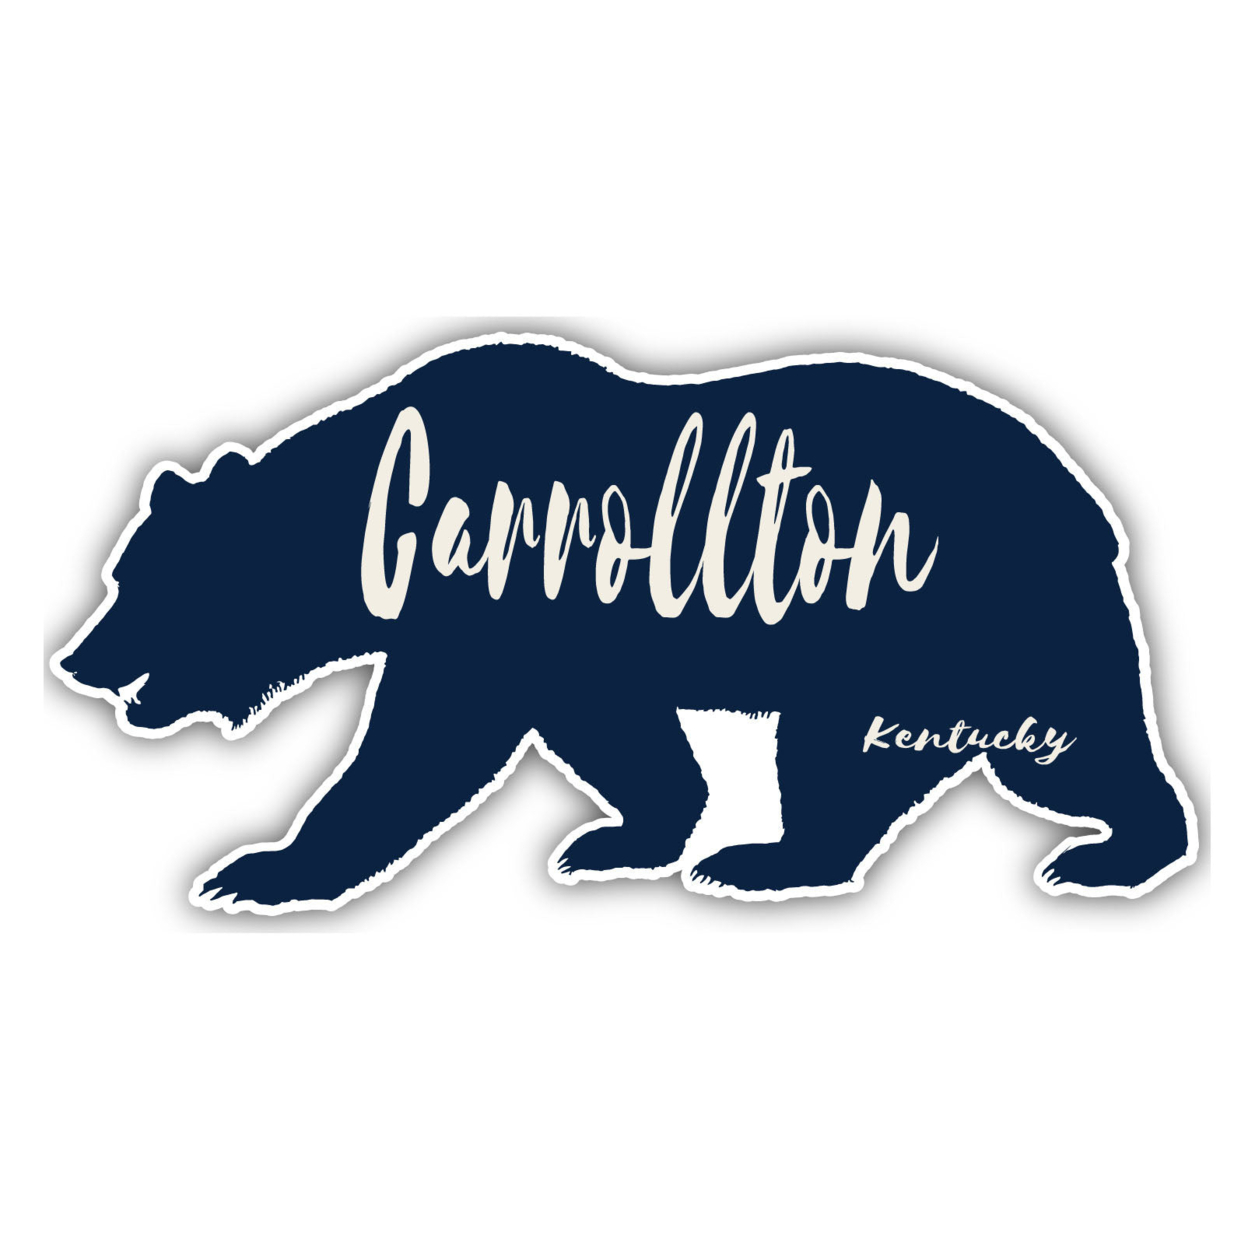 Carrollton Kentucky Souvenir Decorative Stickers (Choose Theme And Size) - 4-Pack, 8-Inch, Bear